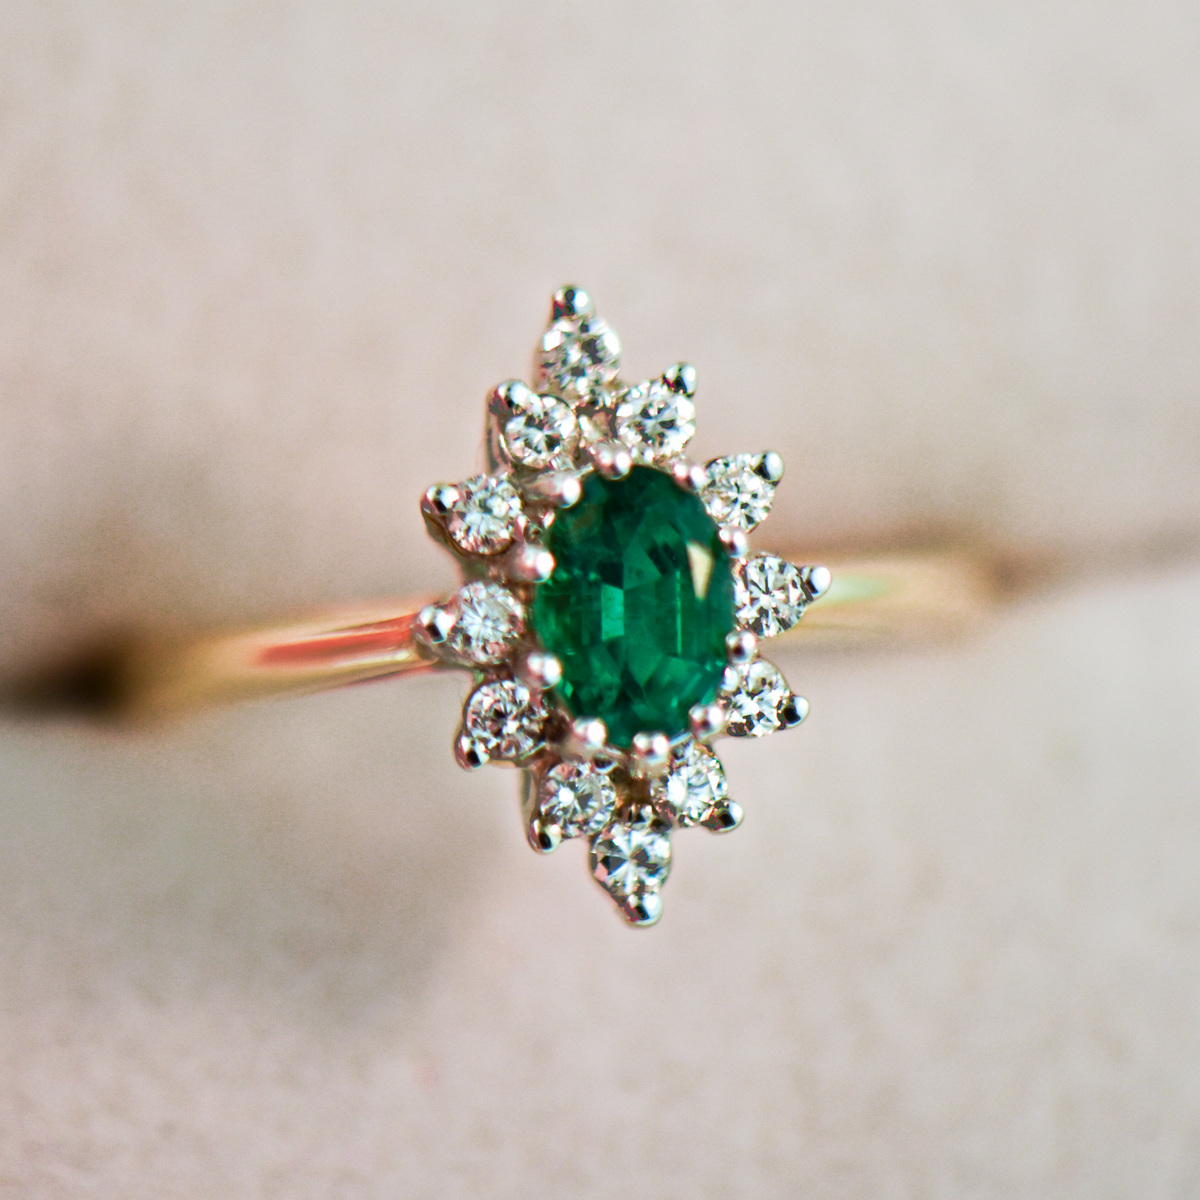 Natural emerald cut emerald. : r/EngagementRings